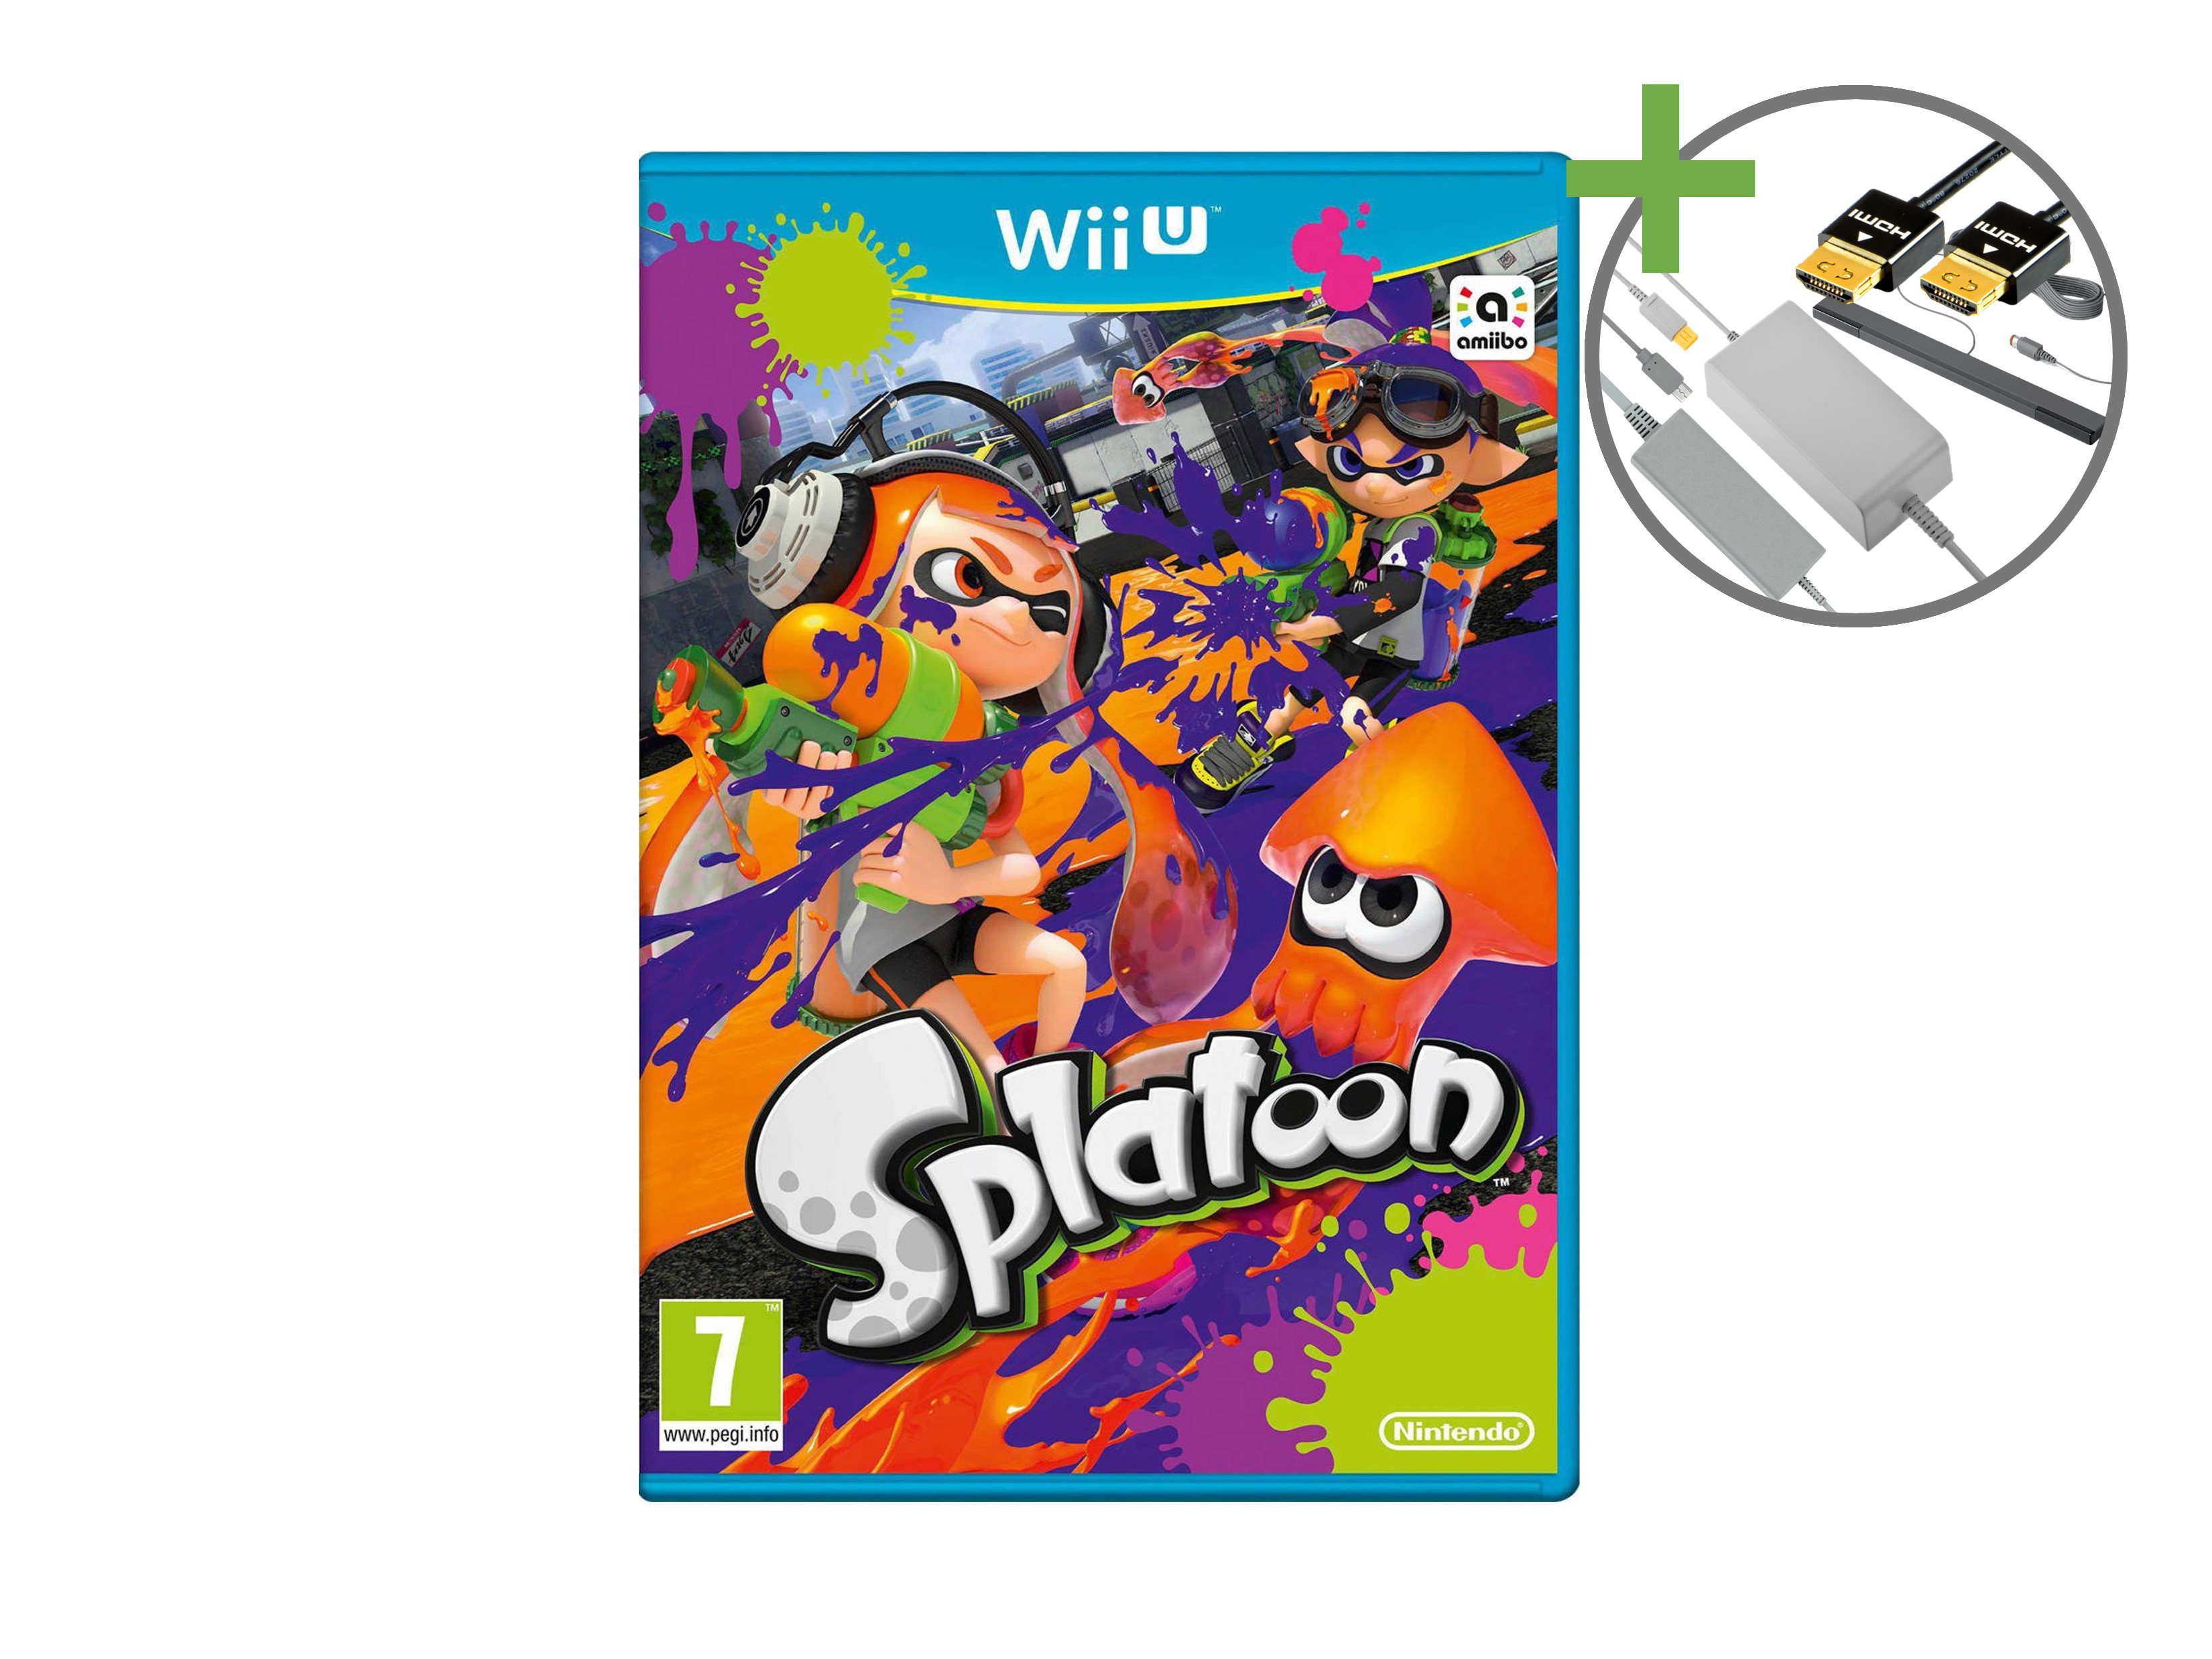 Nintendo Wii U Starter Pack - Splatoon Edition [Complete] - Wii U Hardware - 5